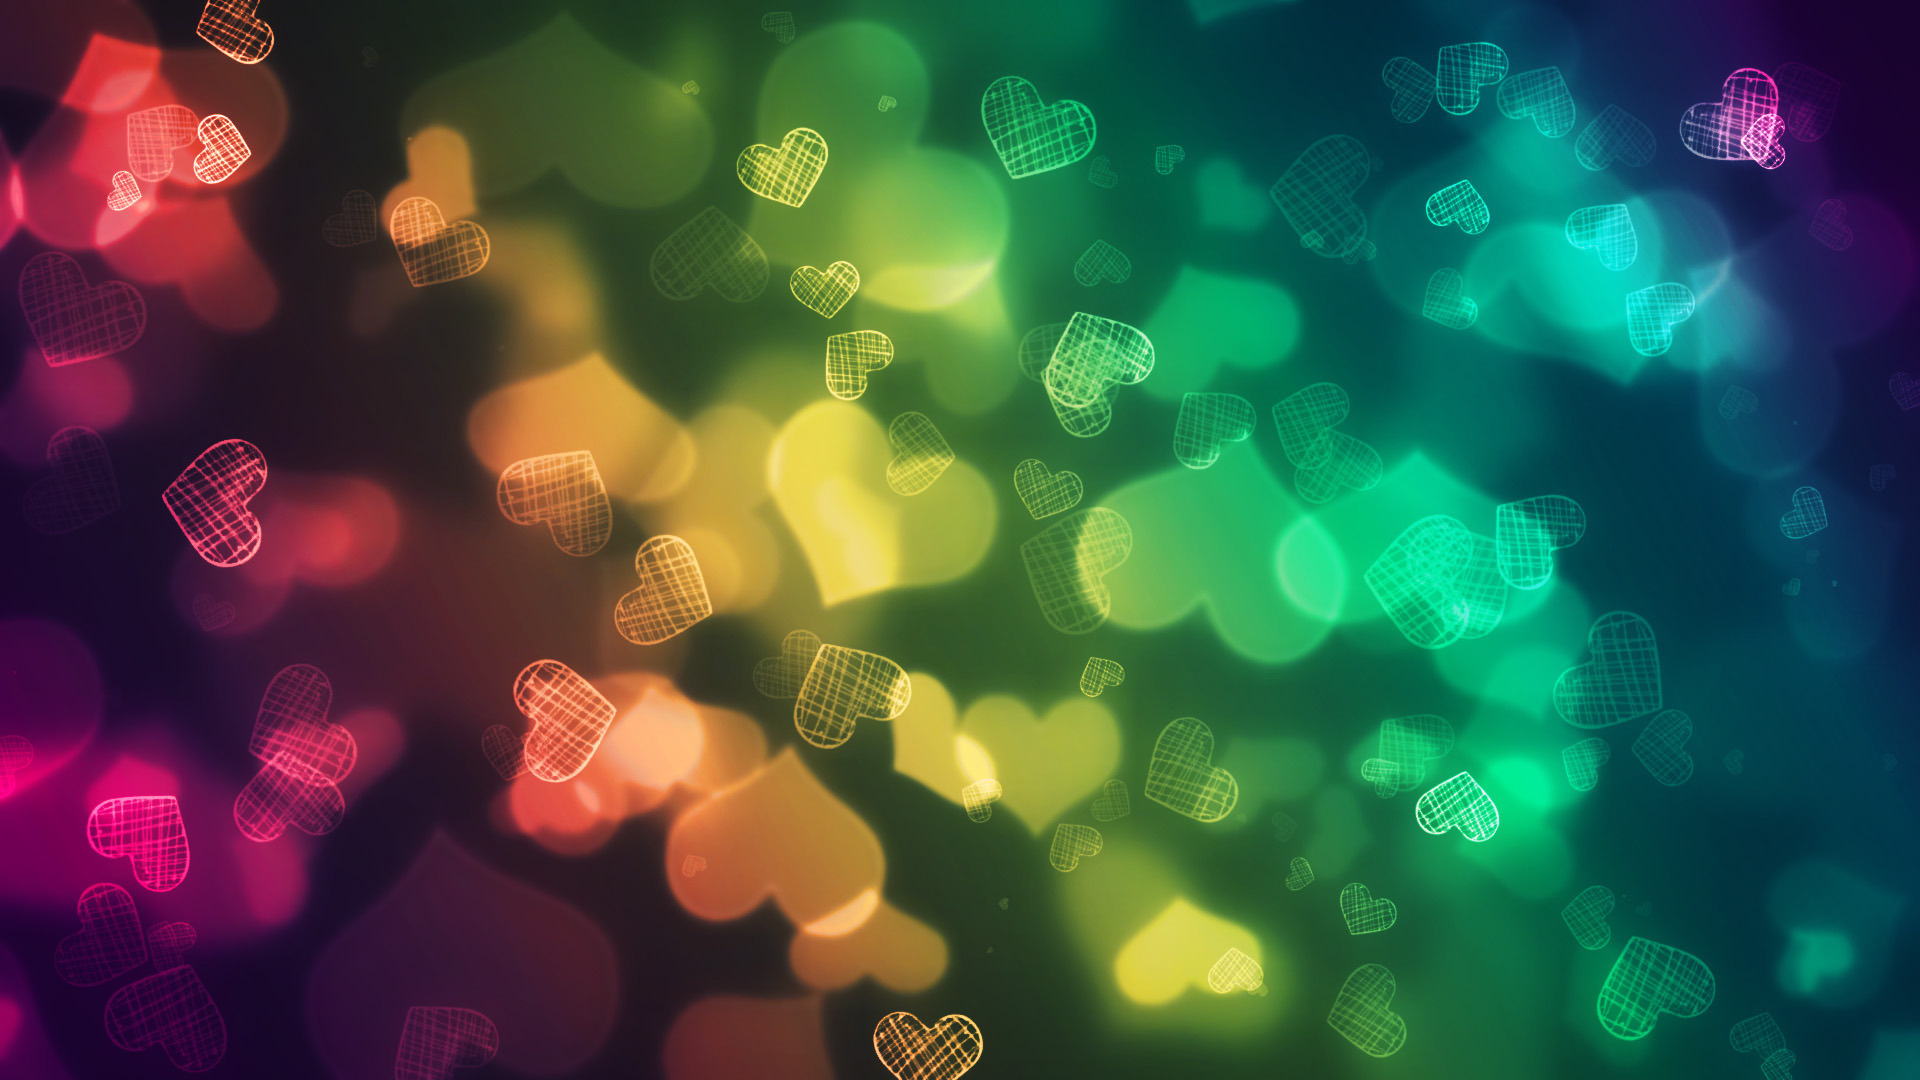 Neon Heart Background By Jessie Salamone On Feelgrafix